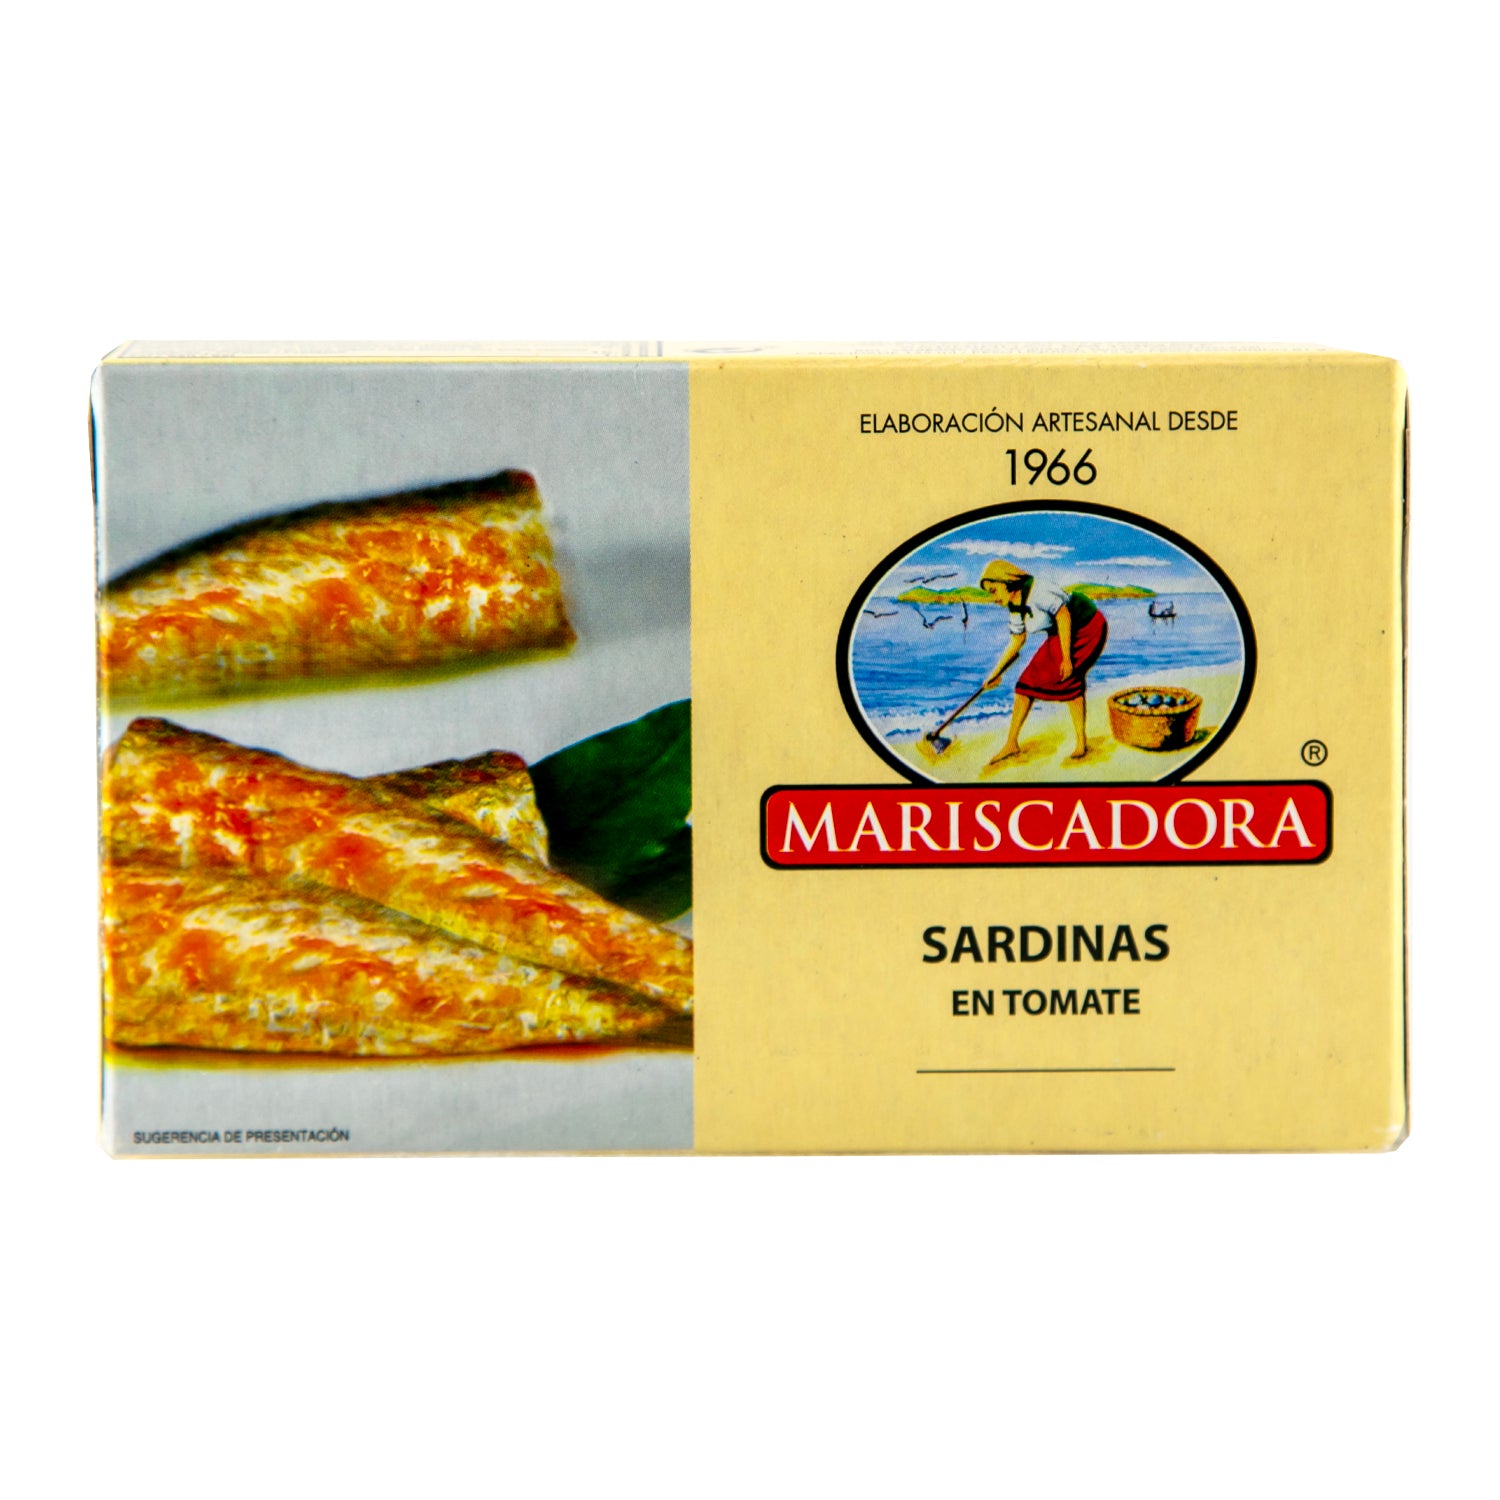 Mariscadora Sardines in Tomato sauce